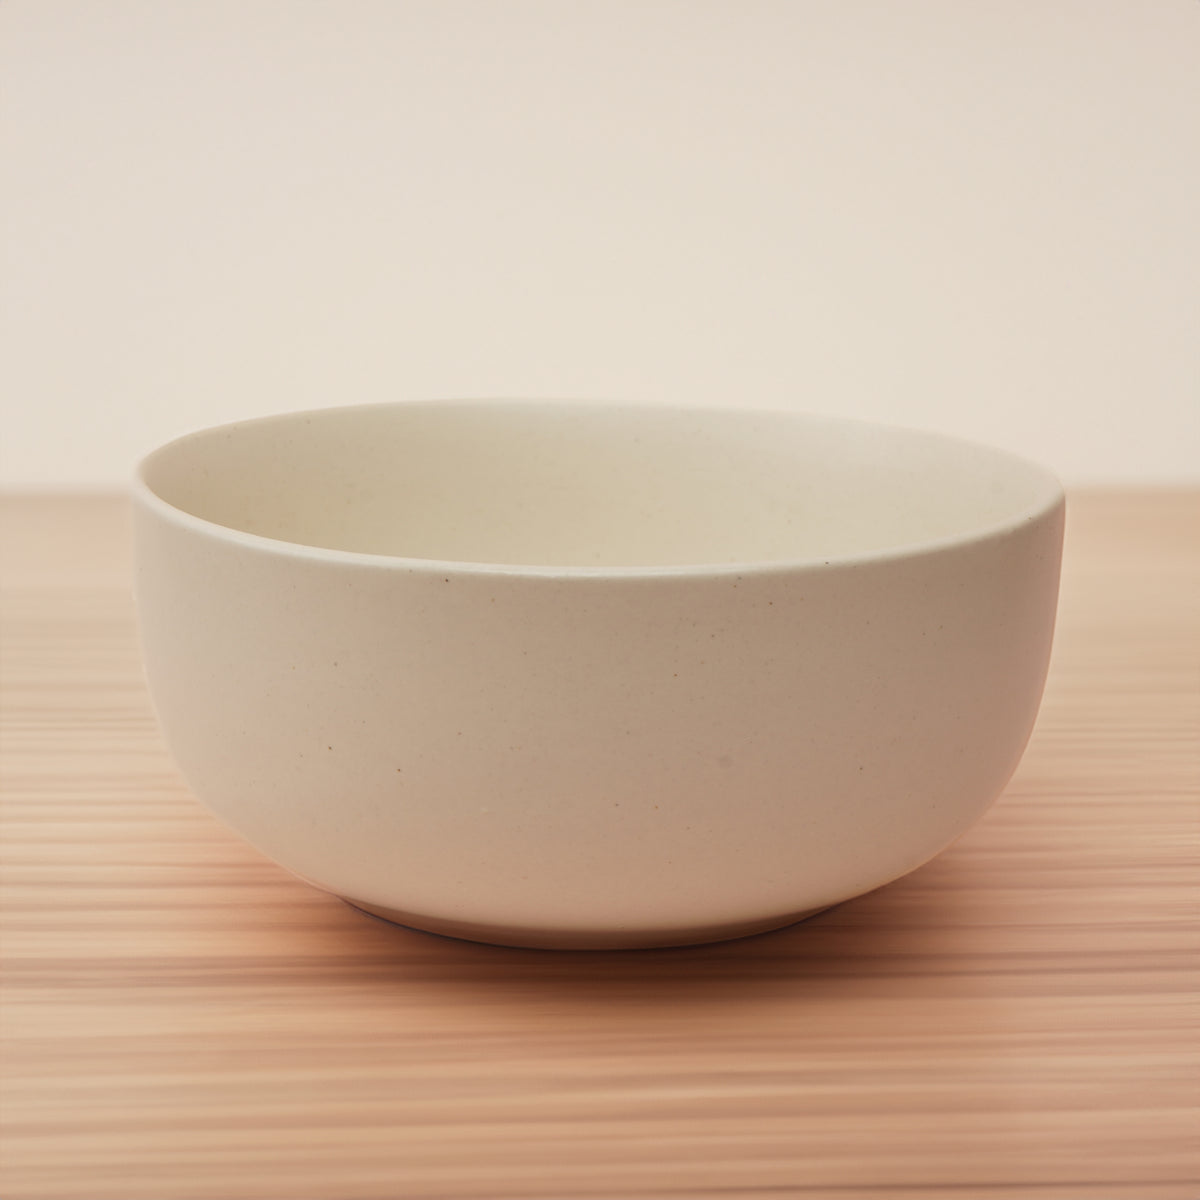 Minimalist Cream Ceramic Bowl: Contemporary Kitchen Essential for Stylish Dining